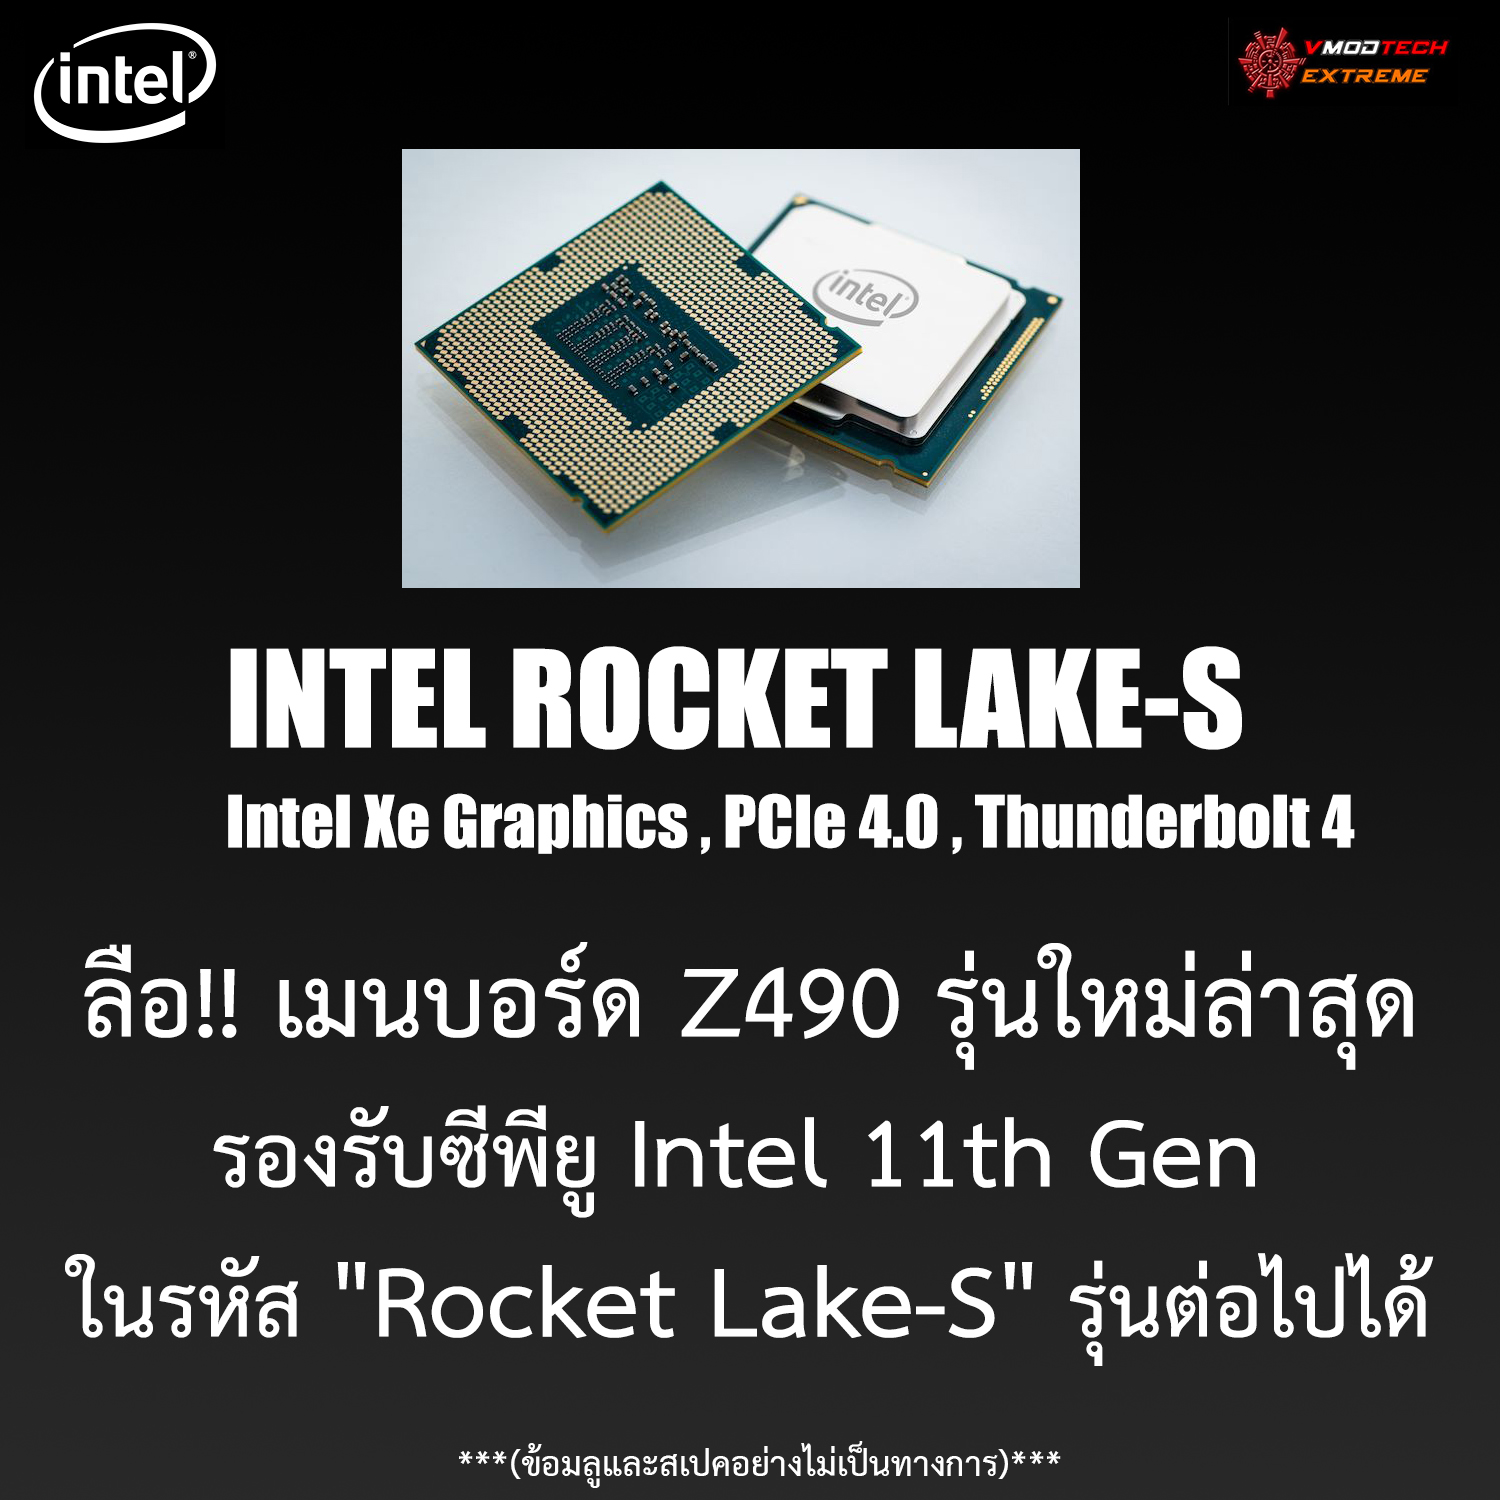 z490 support intel 11th gen rocket lake s ลือ!! เมนบอร์ด Z490 รุ่นใหม่ล่าสุดจะสามารถรองรับซีพียู Intel 11th Gen ในรหัส Rocket Lake S รุ่นต่อไปได้ 